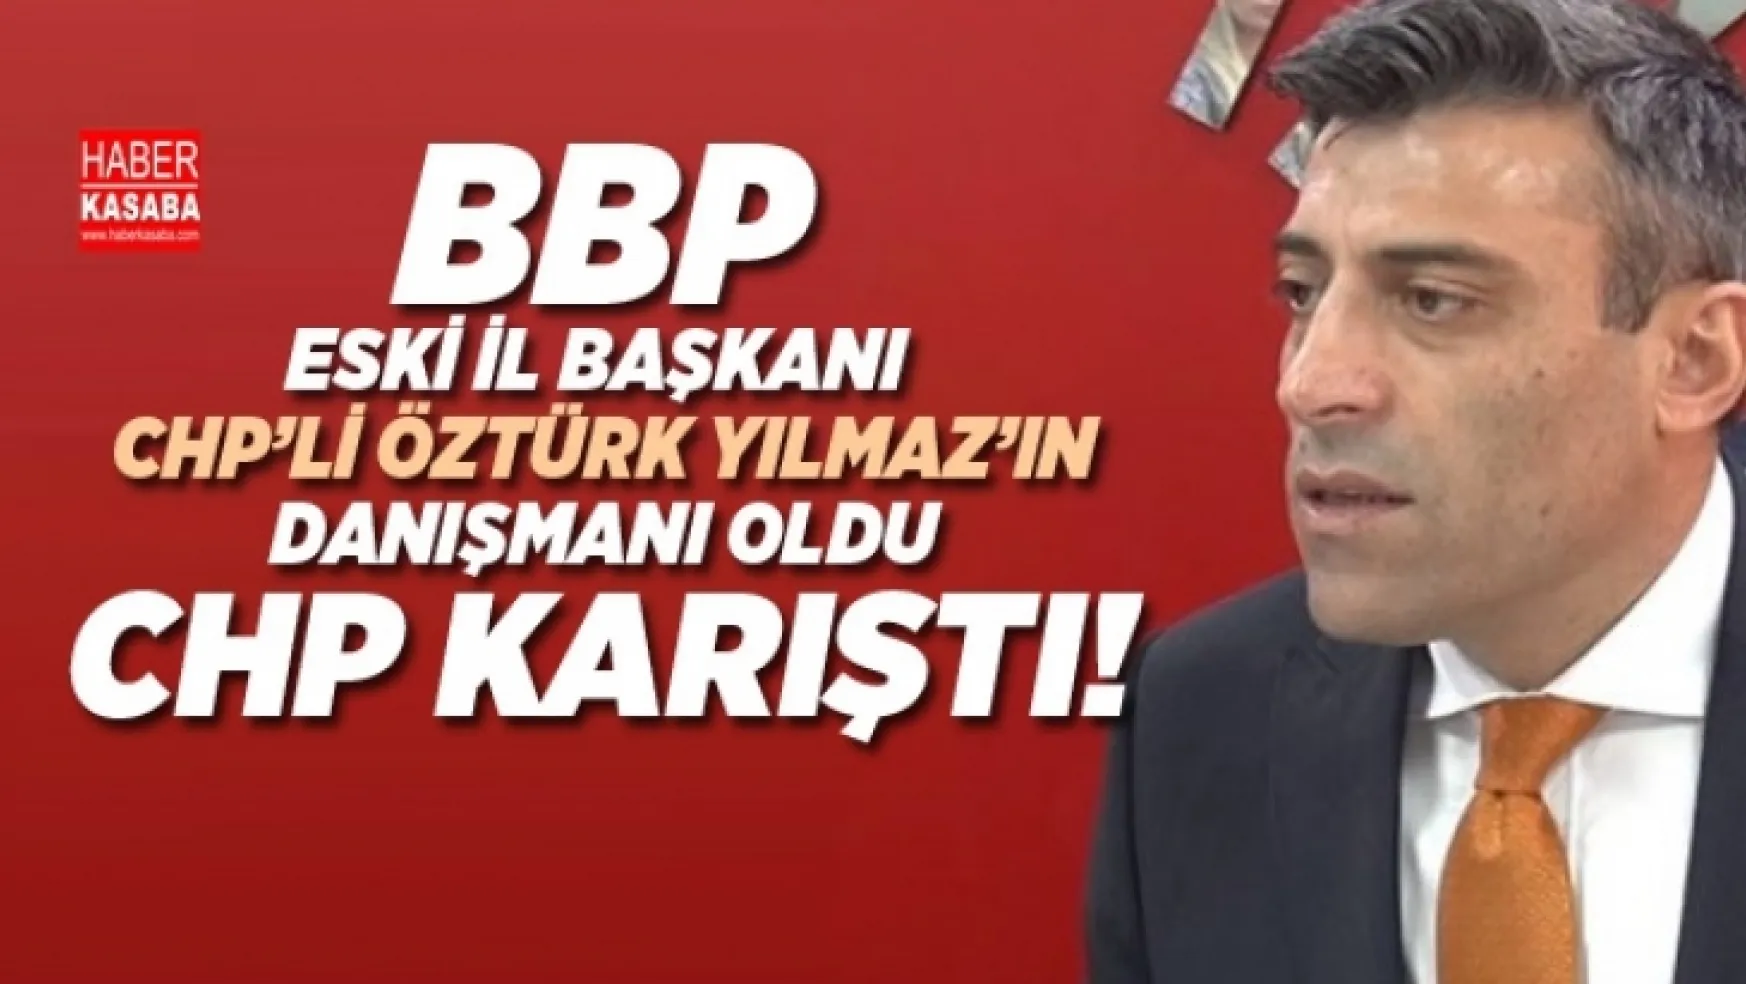 BBP eski il başkanı CHP'li Öztürk Yılmaz'a danışman oldu CHP Karıştı!